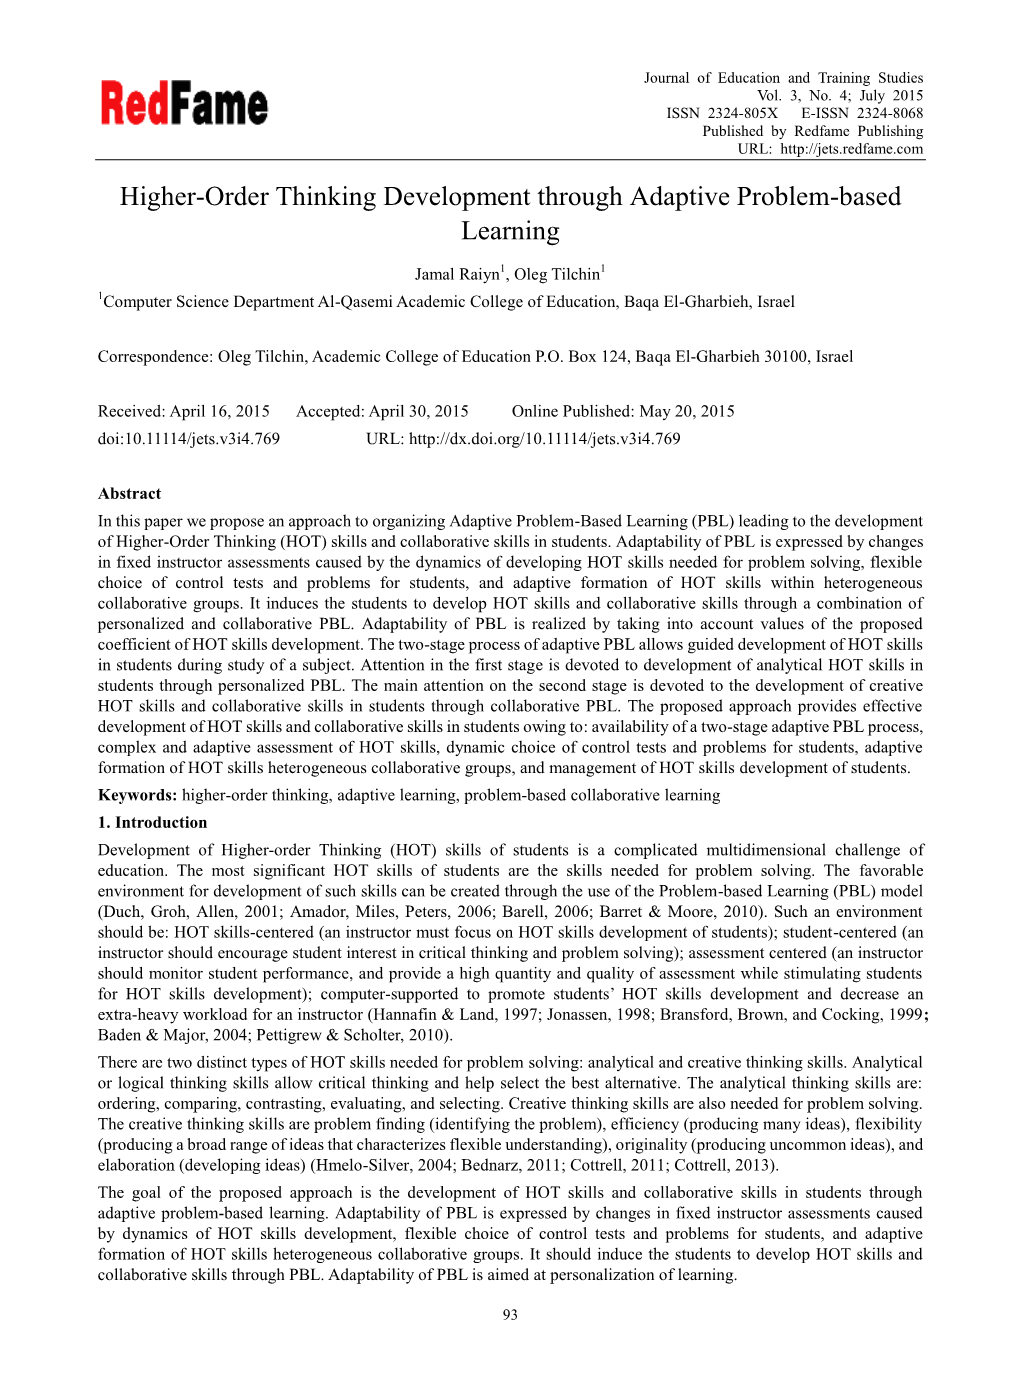 Higher-Order Thinking Development Through Adaptive Problem-Based Learning